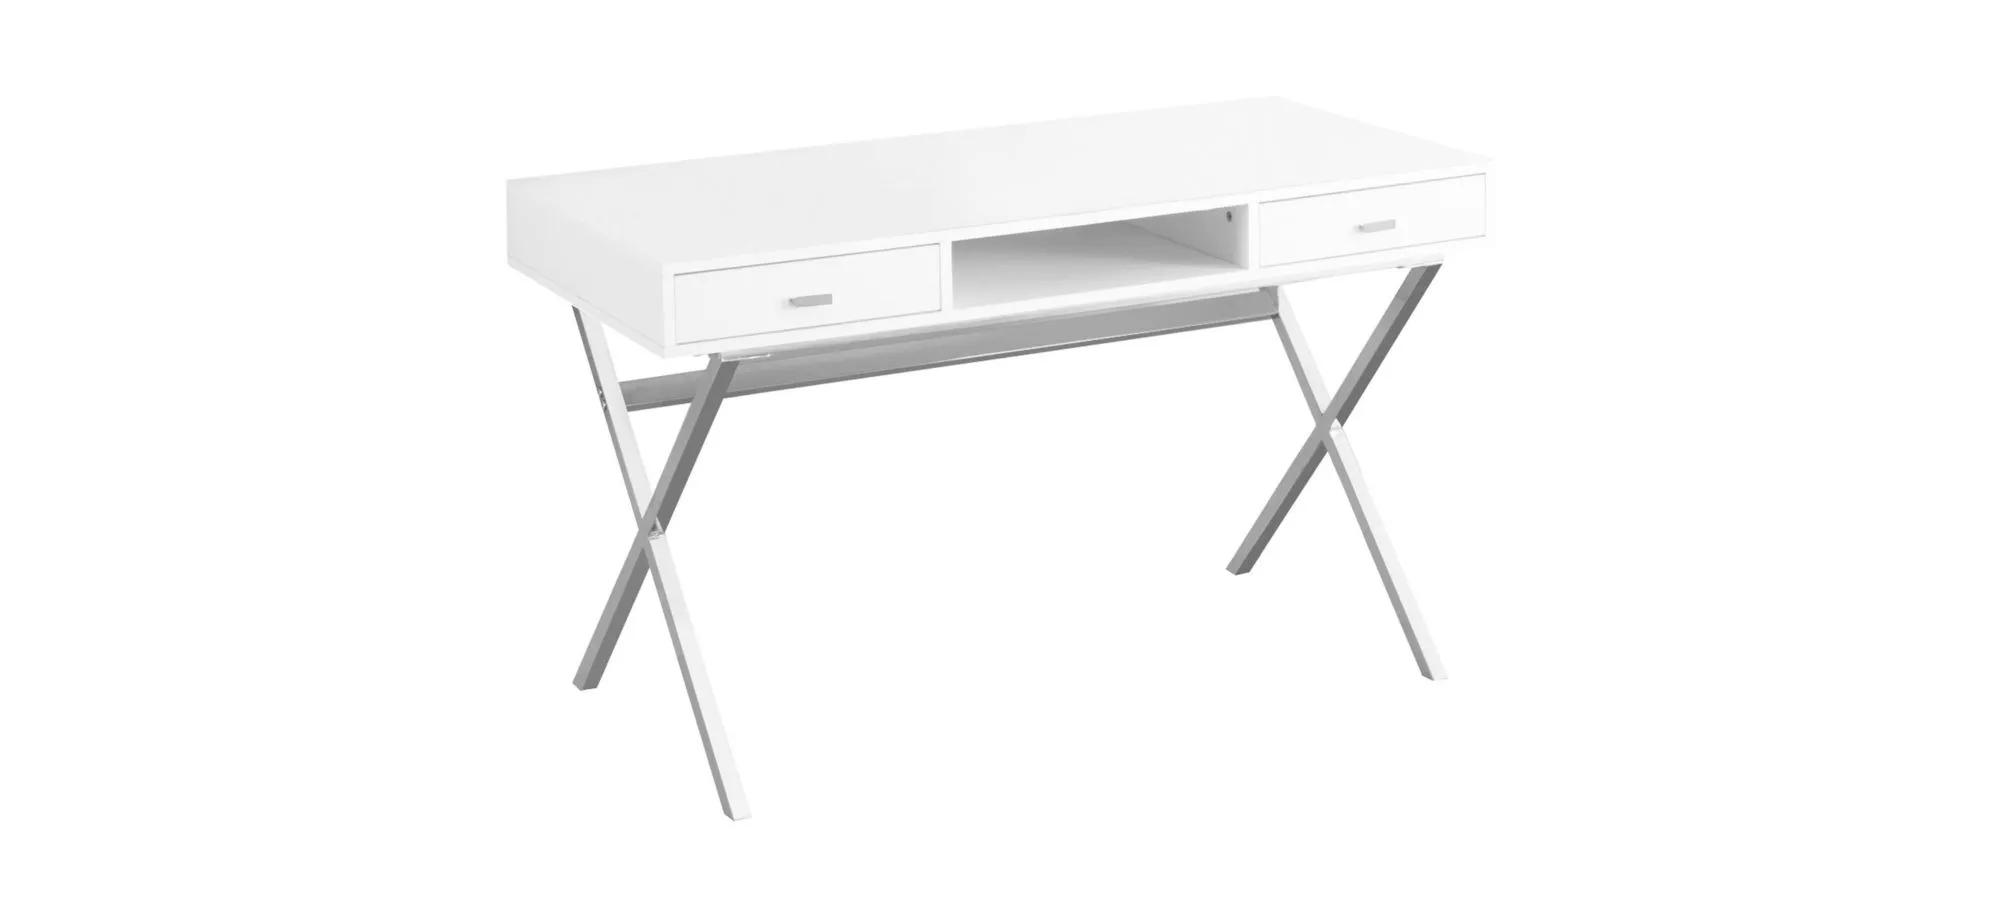 Iman Computer Desk in White by Monarch Specialties